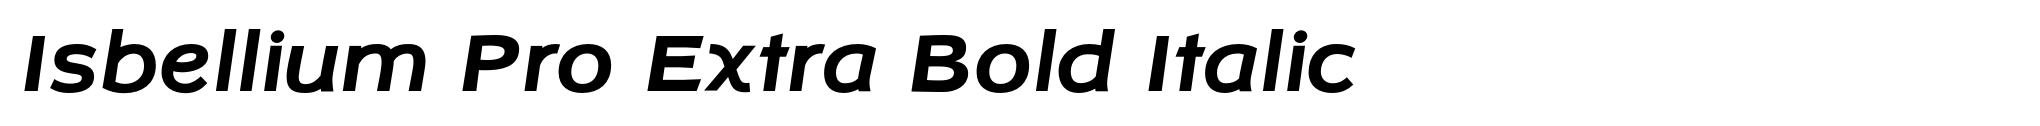 Isbellium Pro Extra Bold Italic image